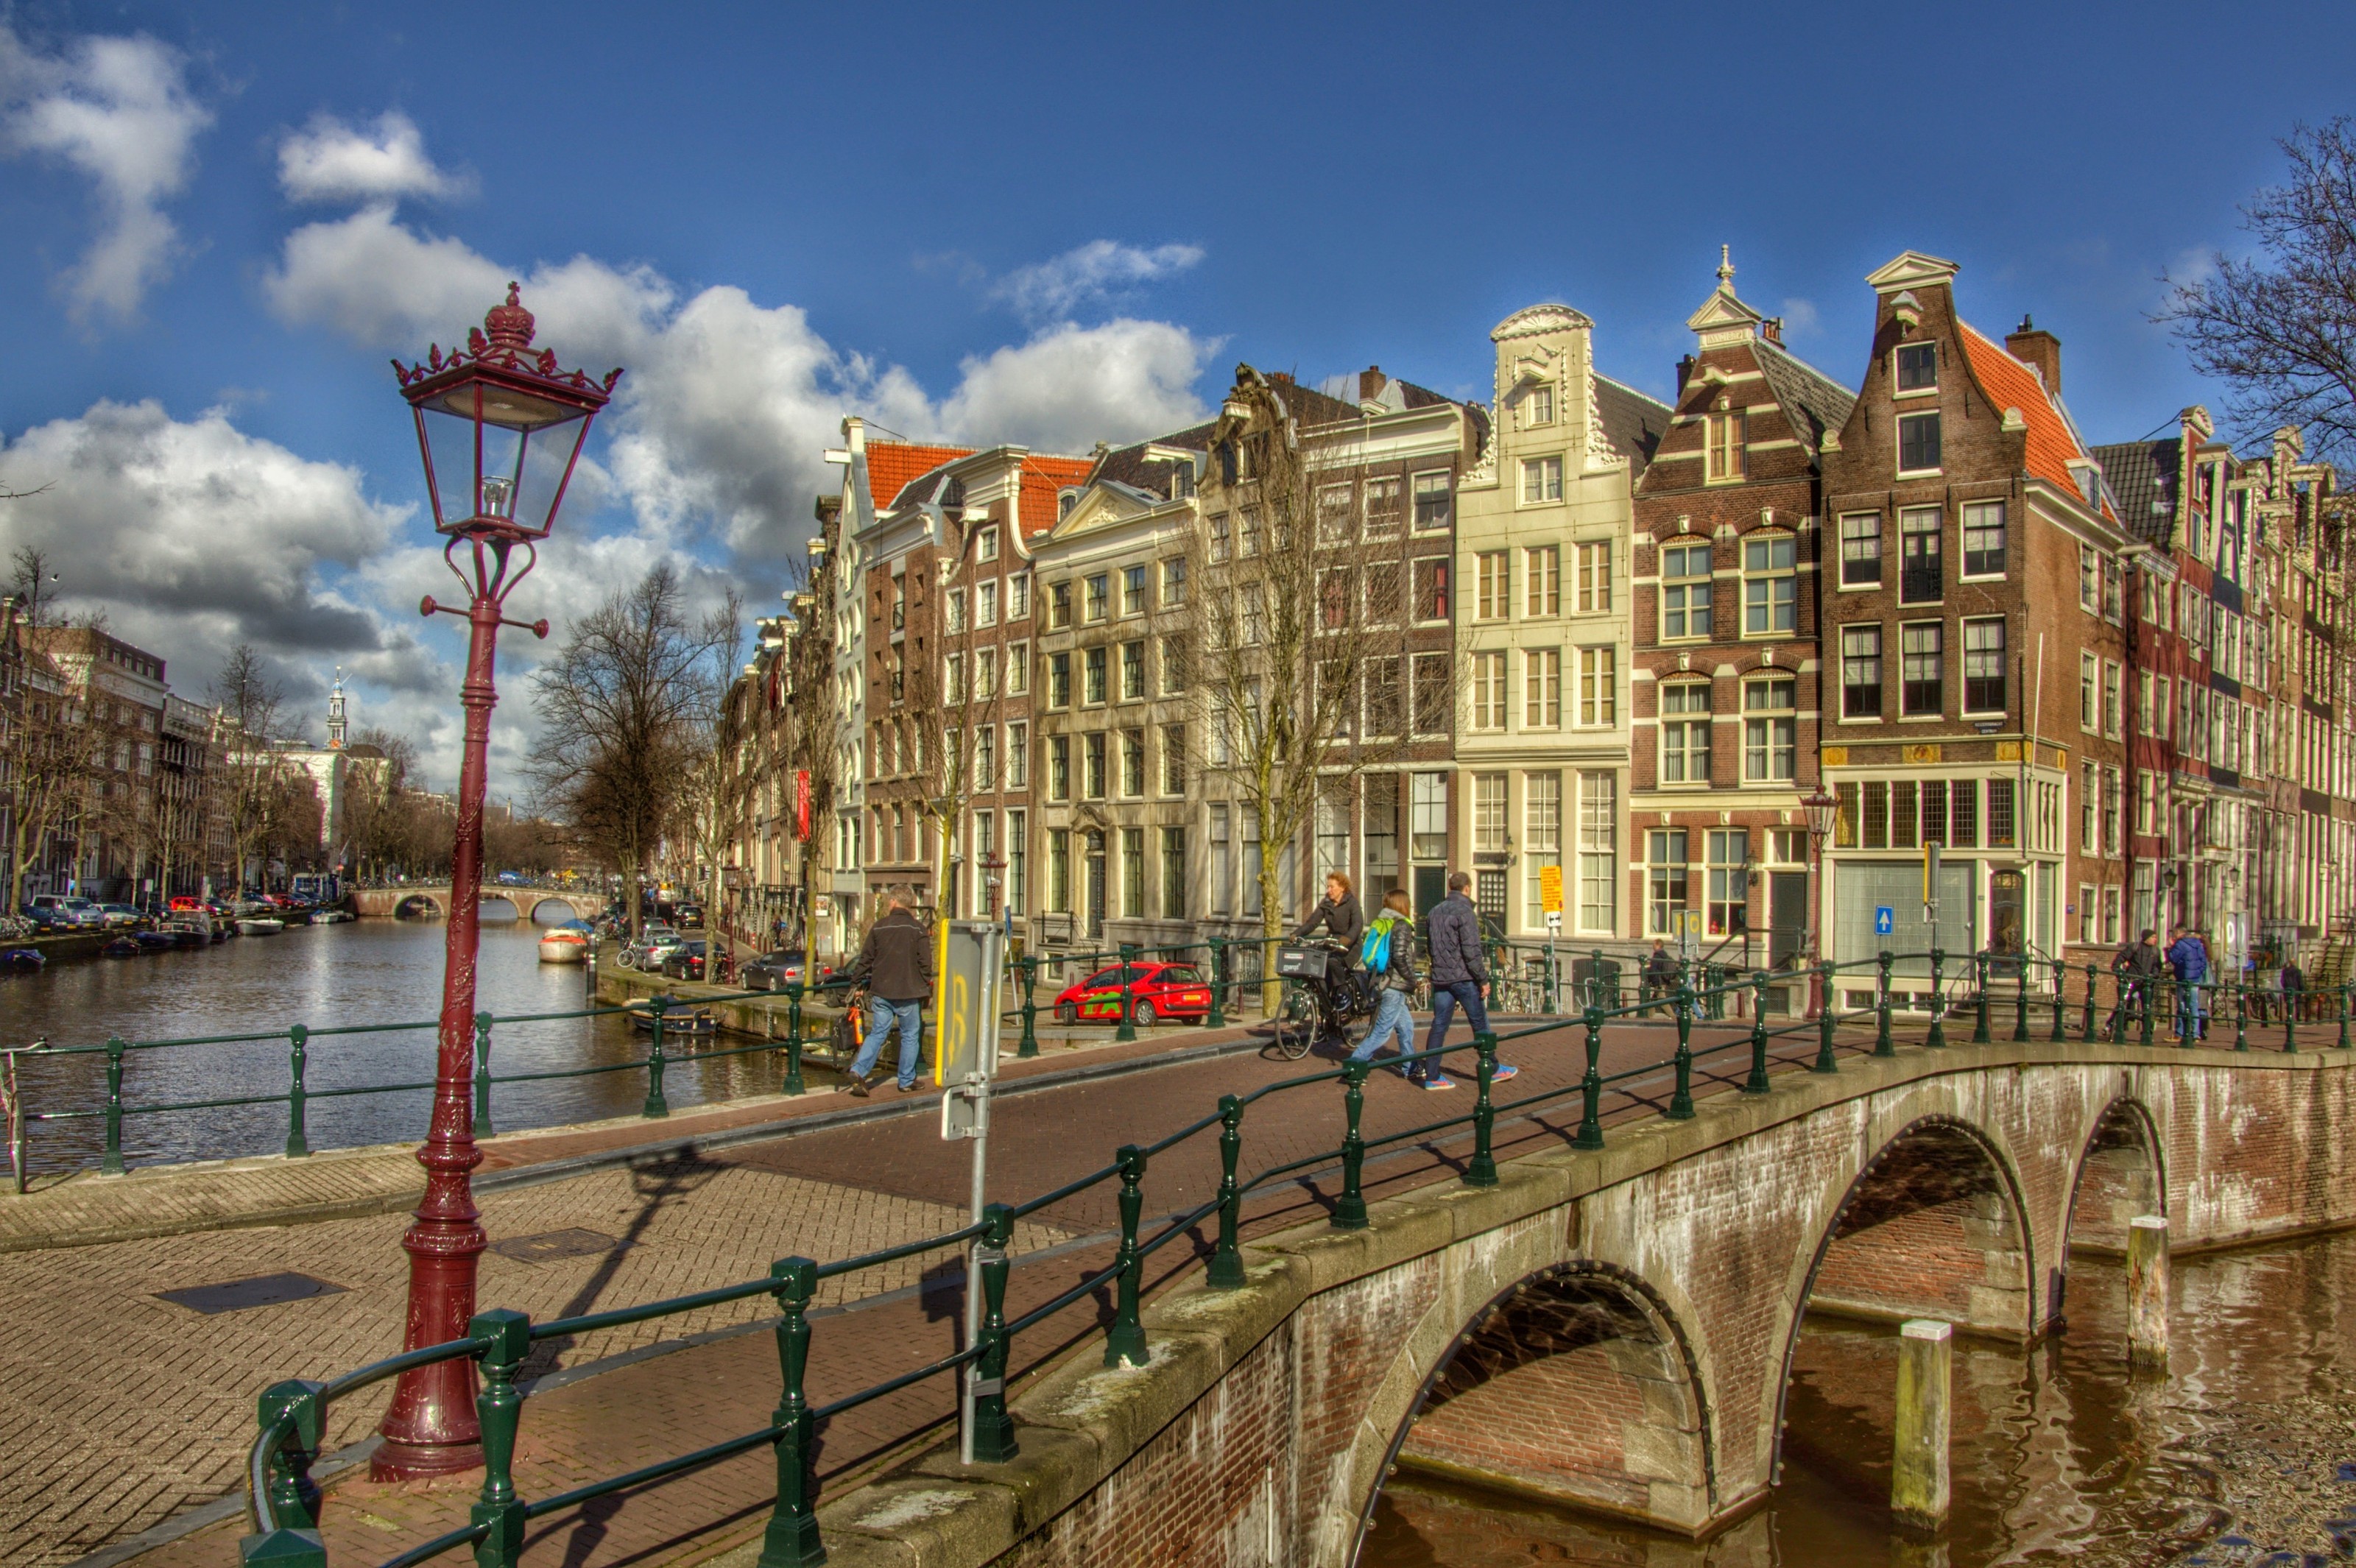 Bridge over canal in amsterdam